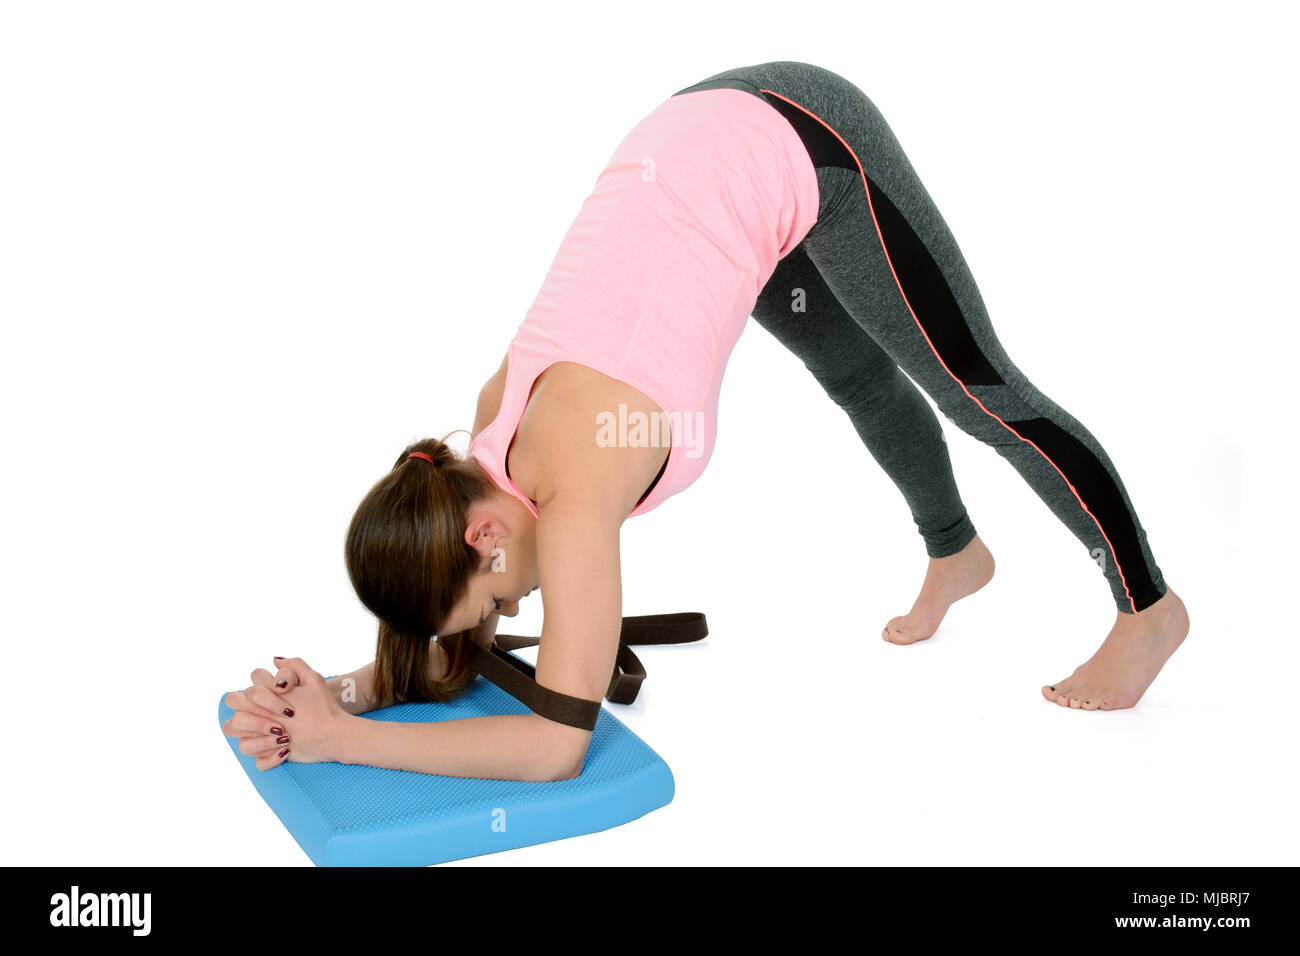 10 Advanced Yoga Poses to Teach Students